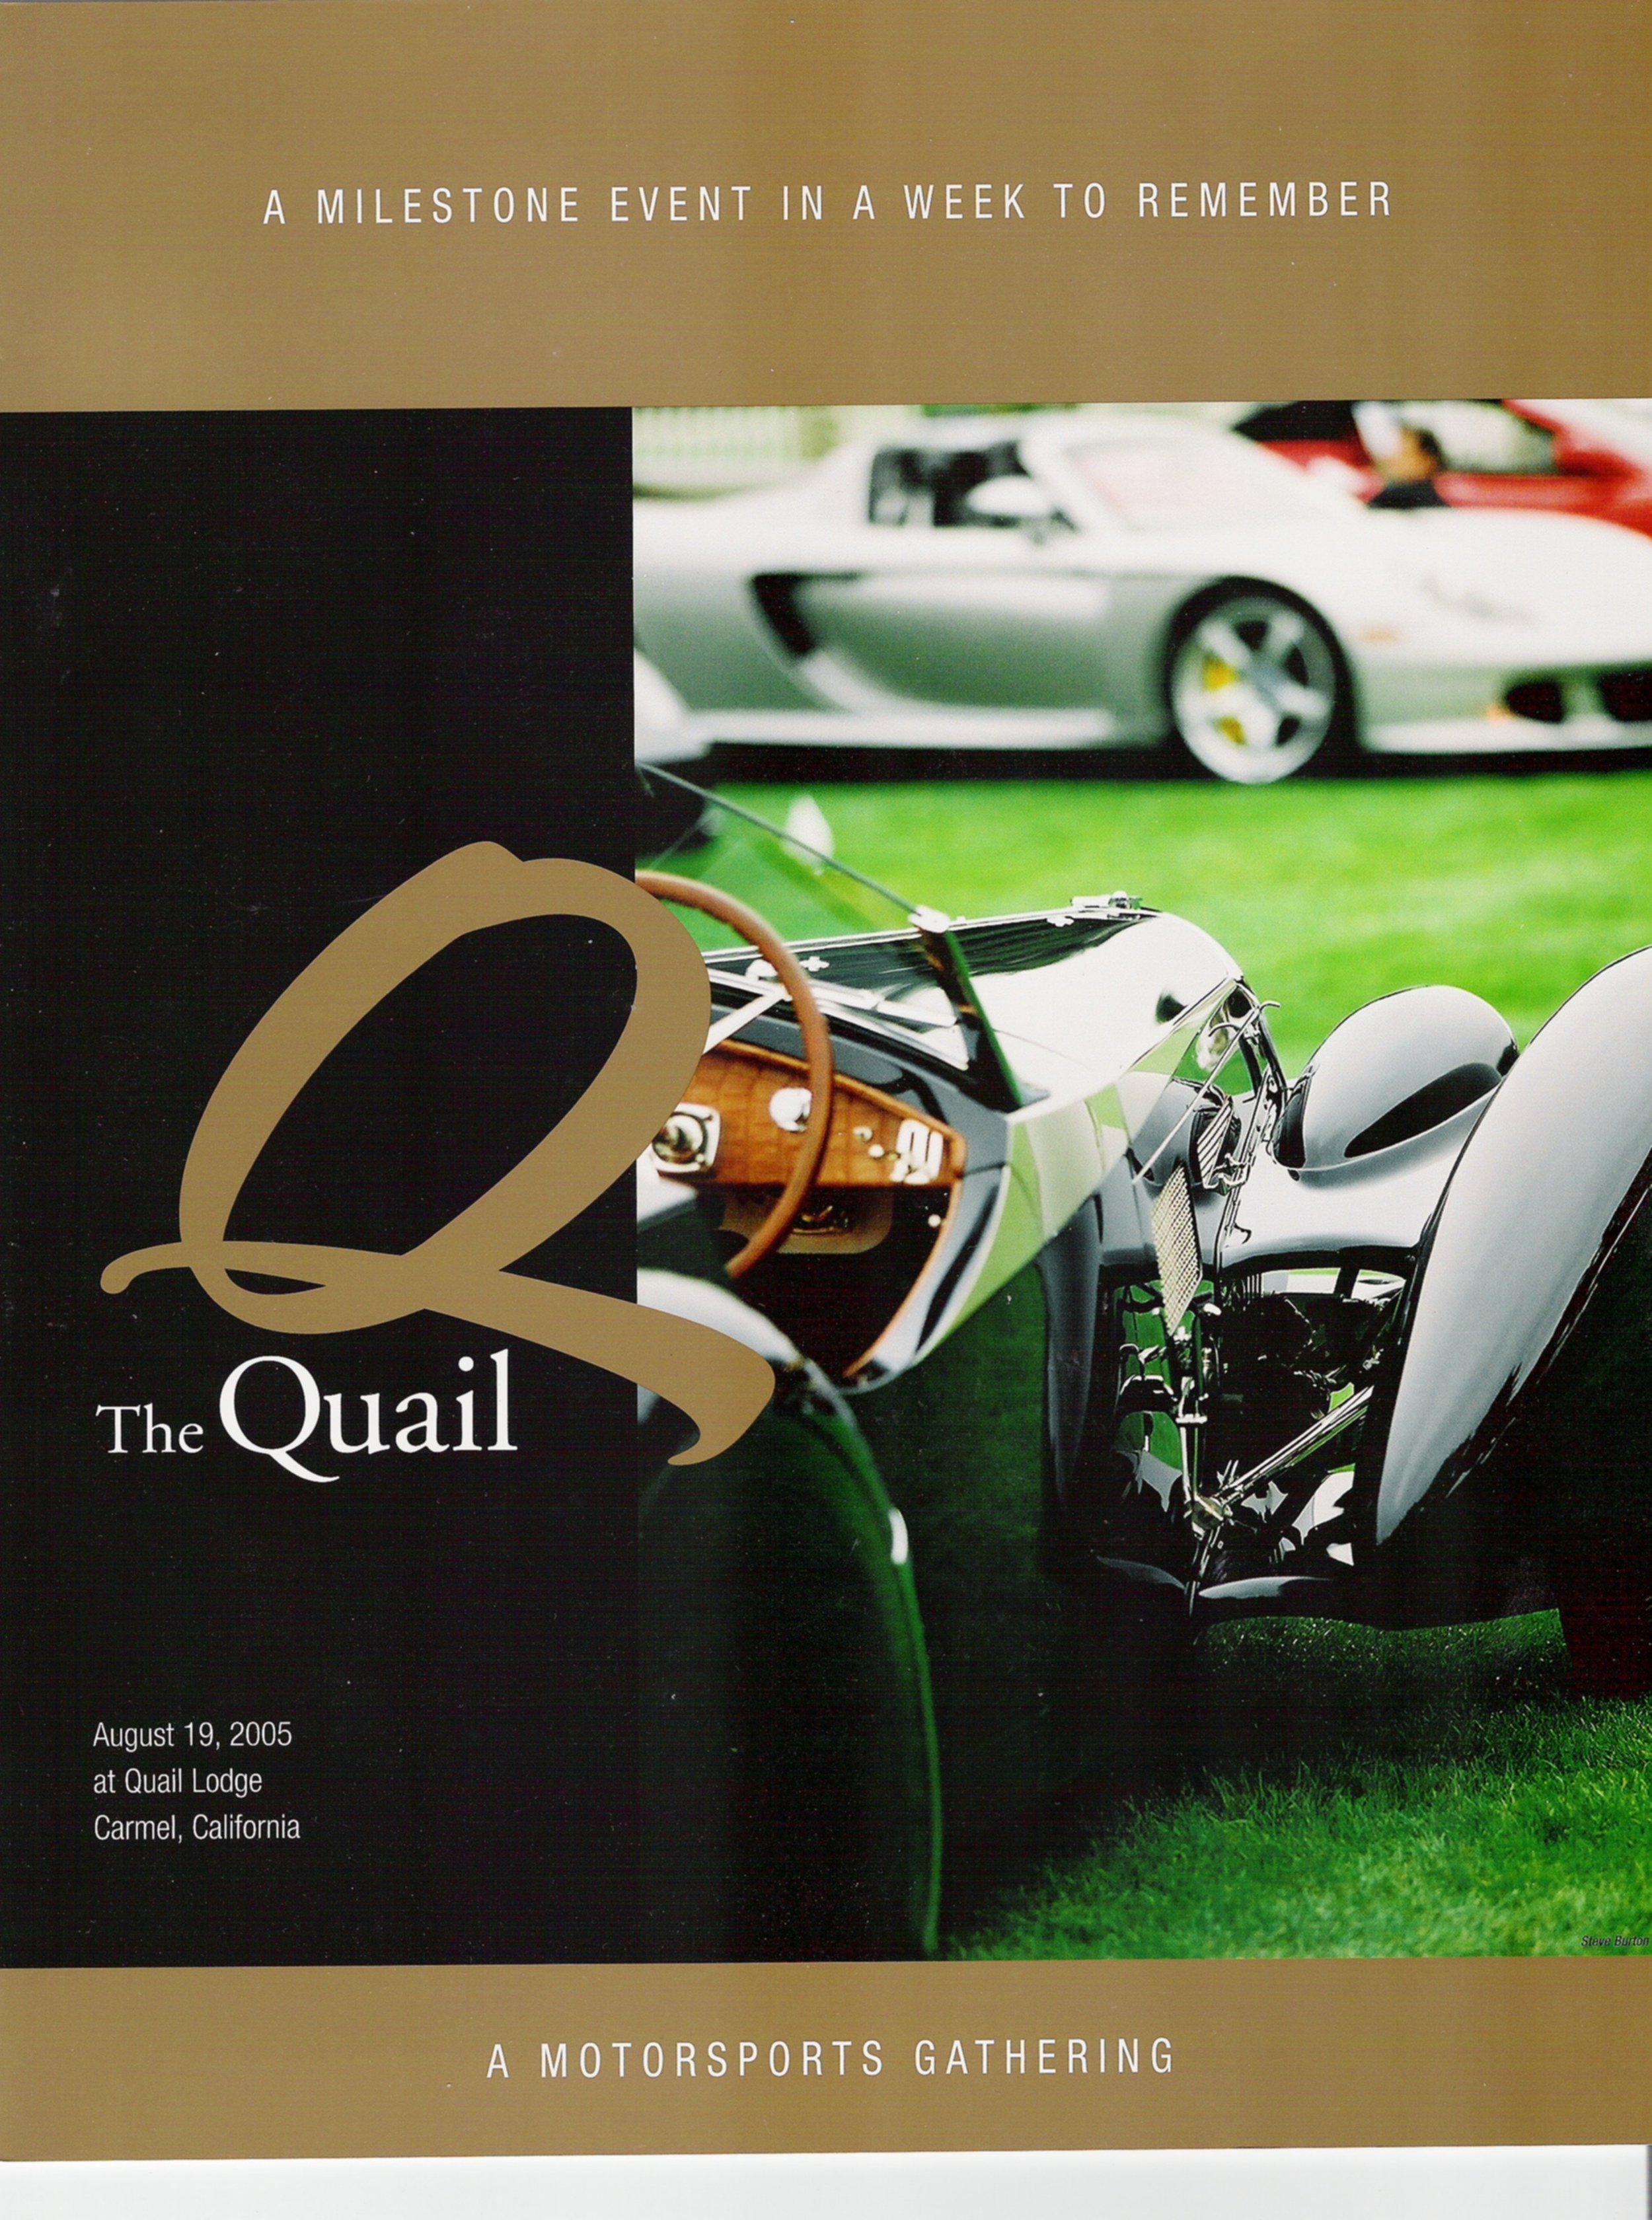 The Quail Motorsports Gathering